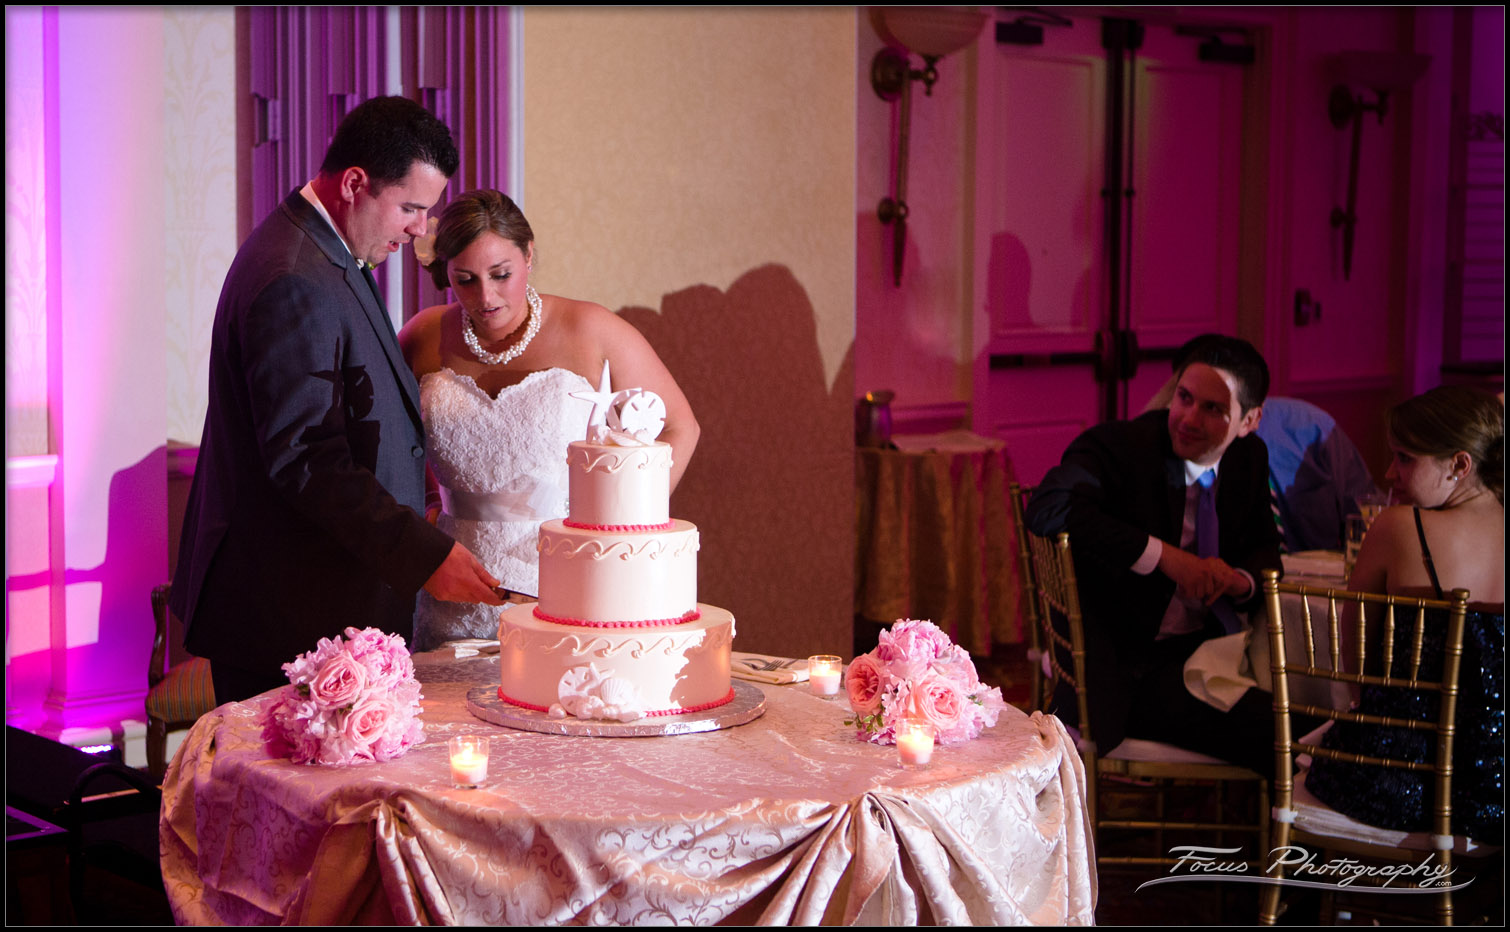 Bride and Groom cut the Wedding Cake